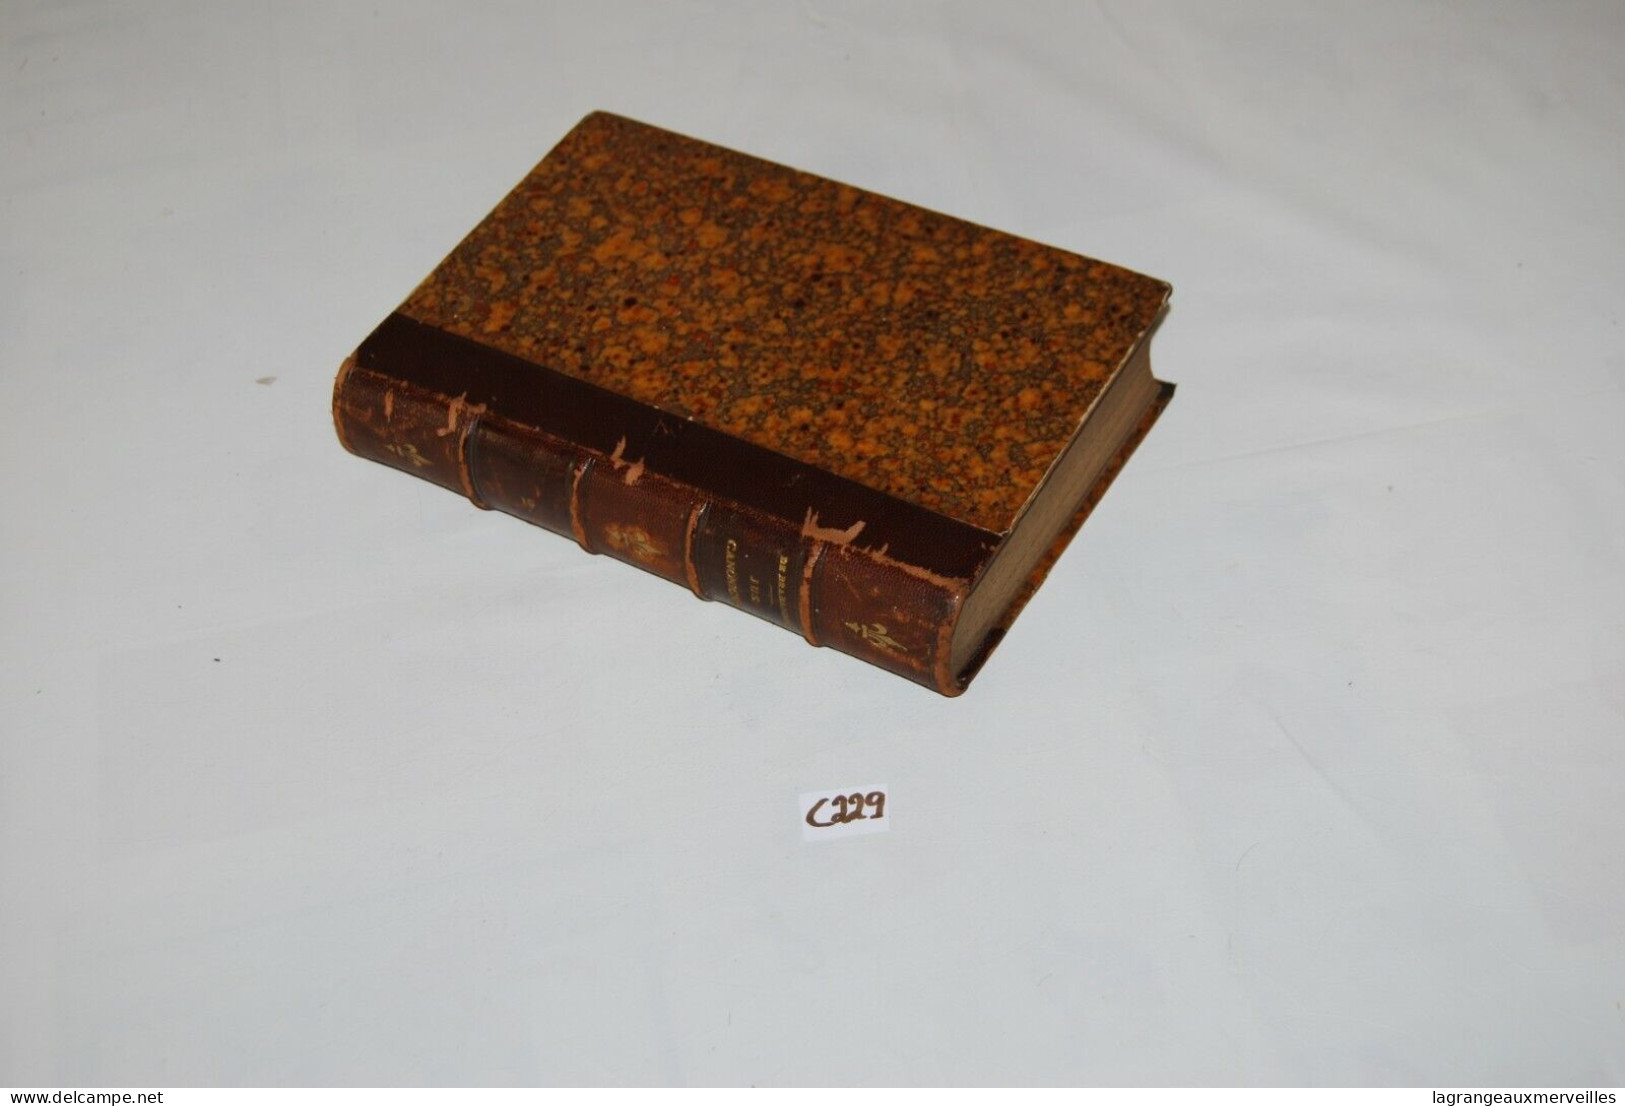 C229 Ancien Livre De Brabandere Jus Canonicum 1889 - Rare Book - Livres Anciens